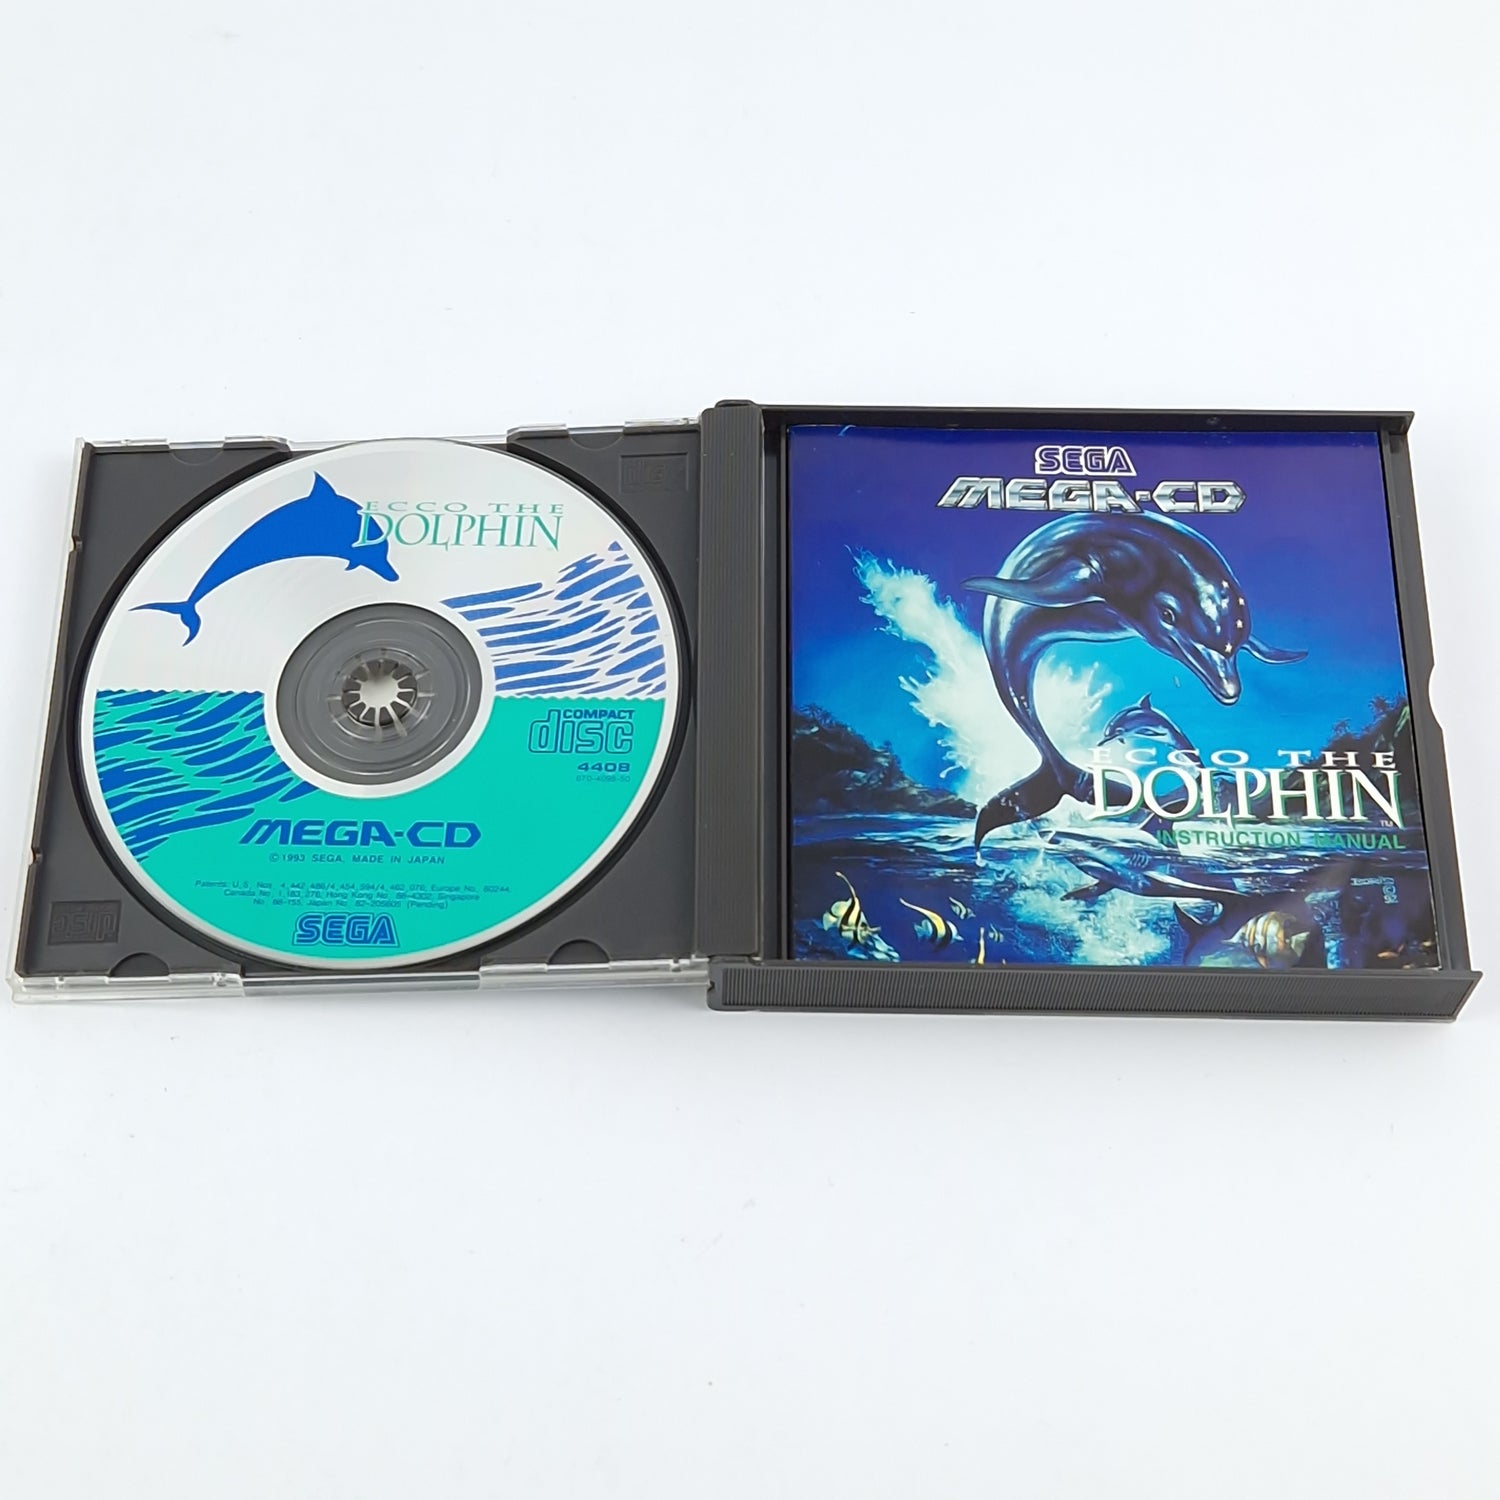 Sega Mega CD Game: Ecco The Dolphin - CD Instructions OVP / MCD PAL DISK Game